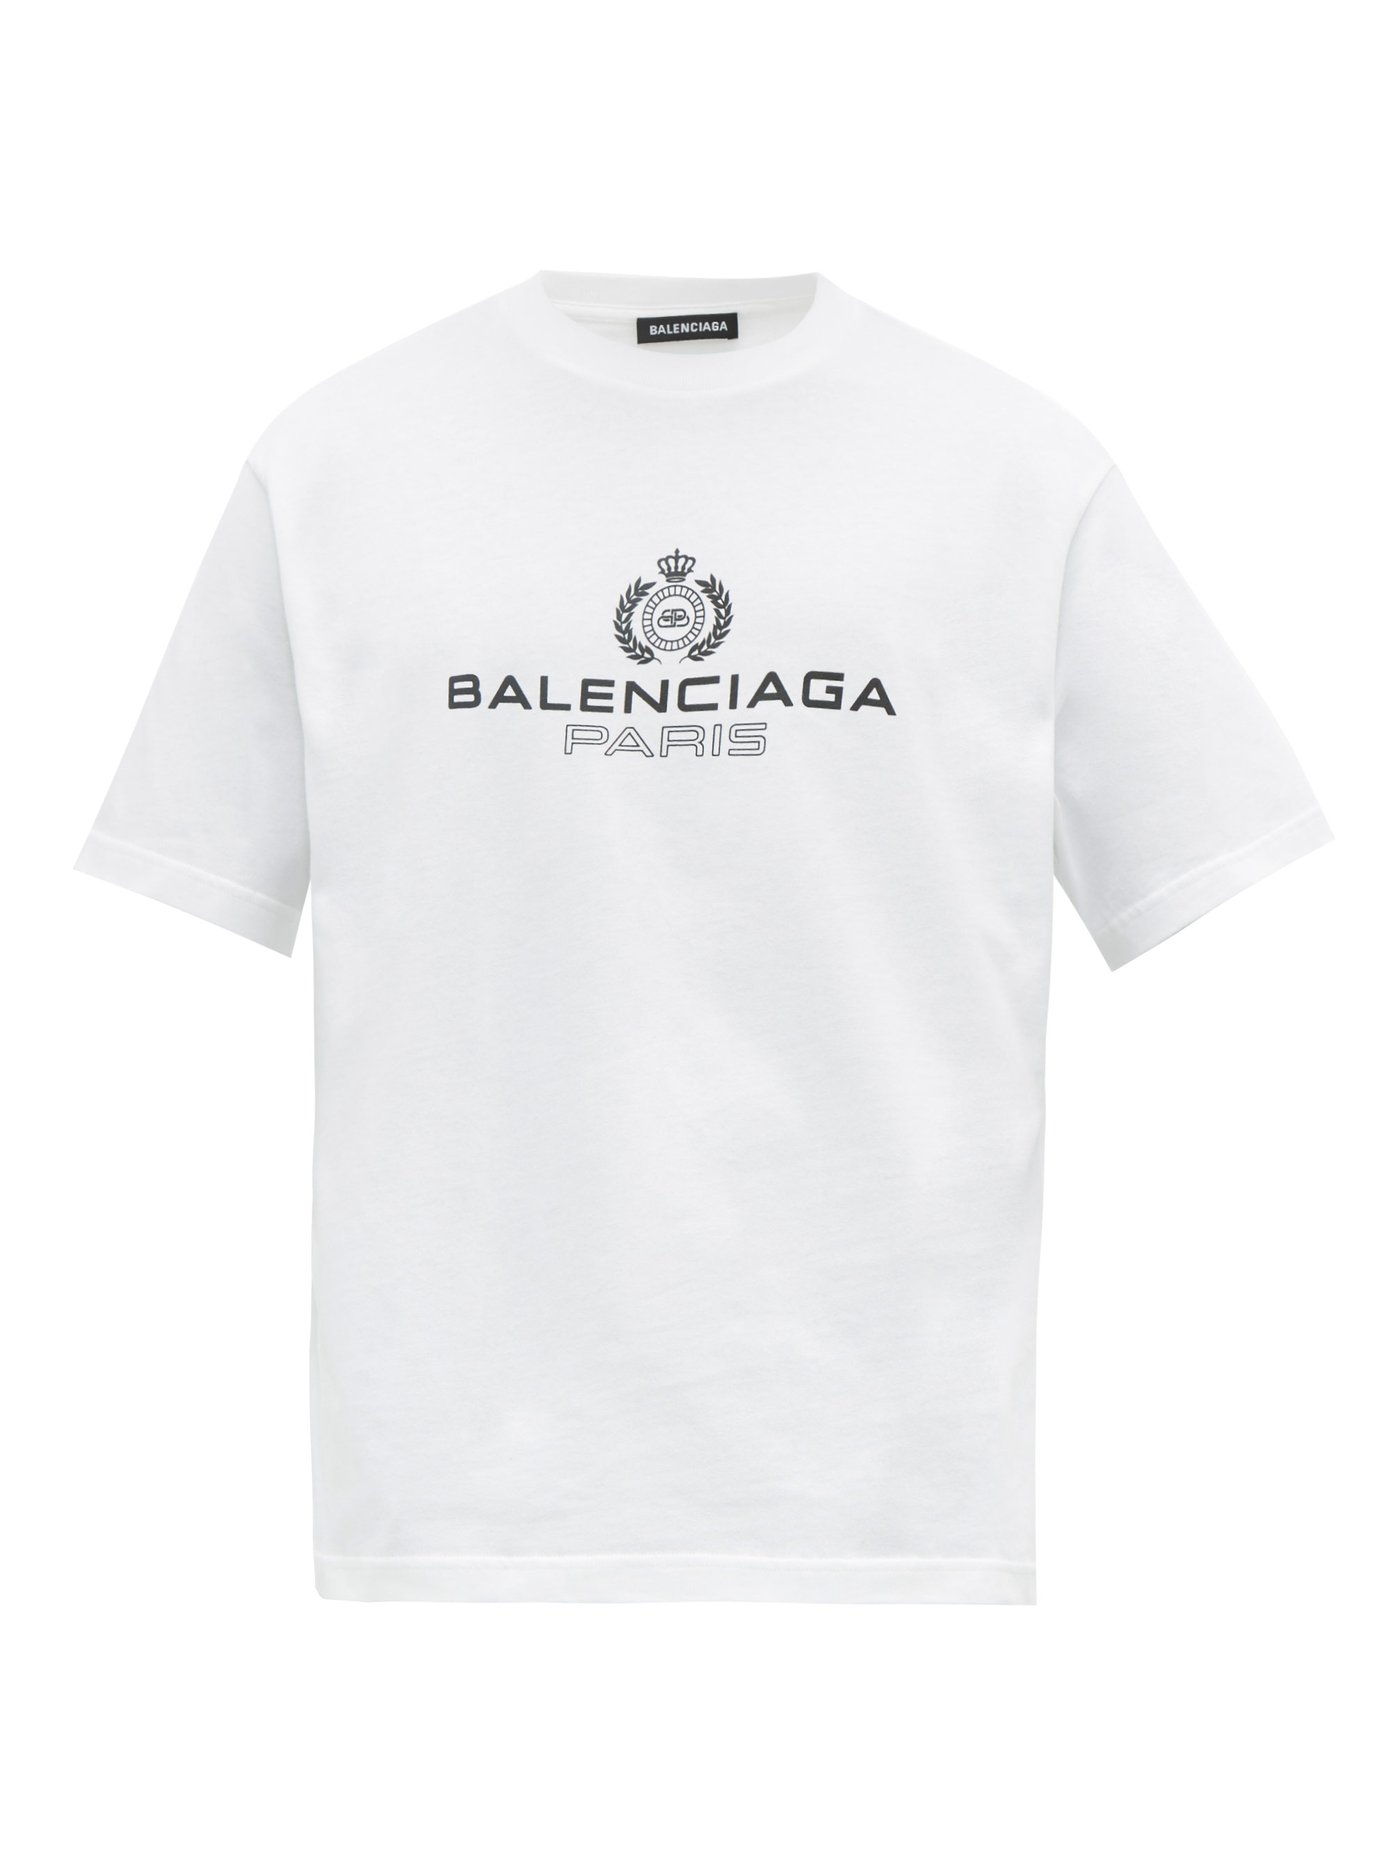 Balenciaga Logo T Shirt Store, 58% OFF | www.emanagreen.com